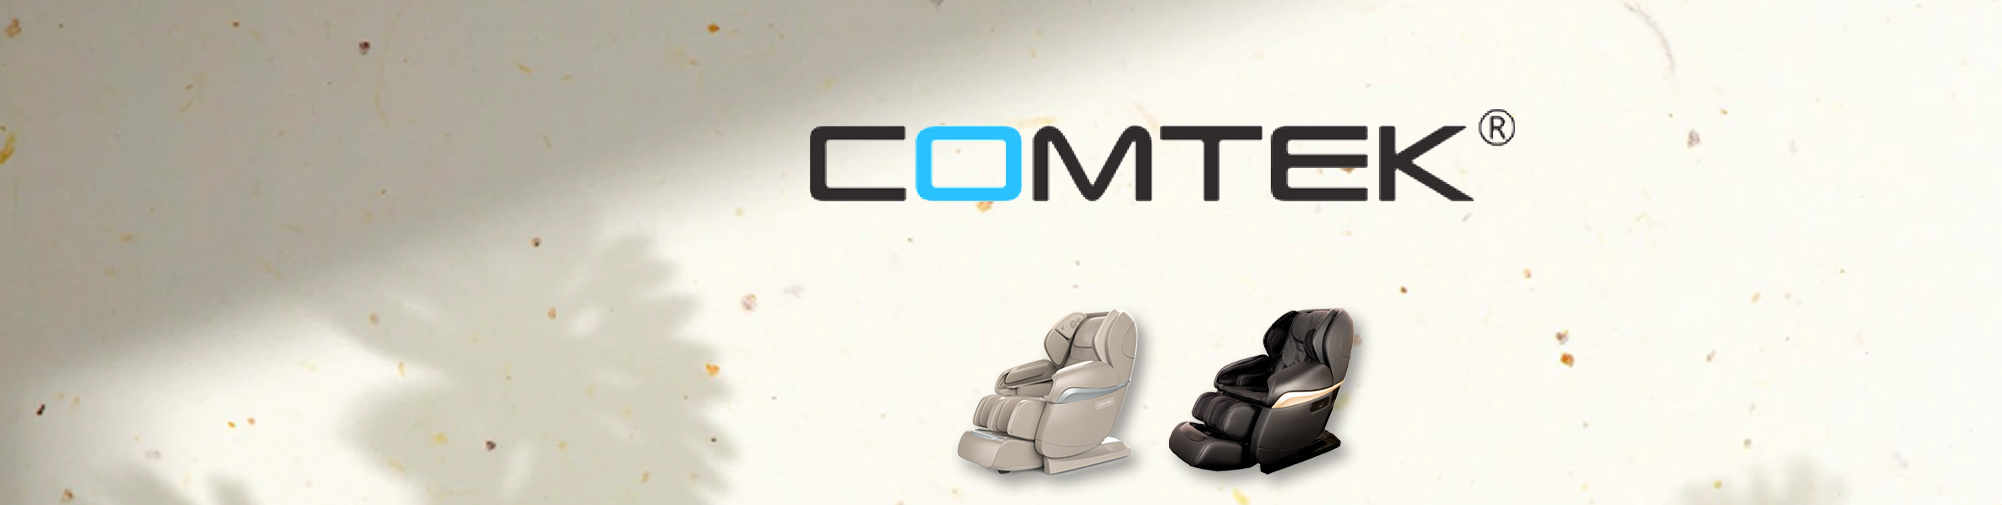 COMTEK – professionierter Urproduzent | Massagesessel Welt